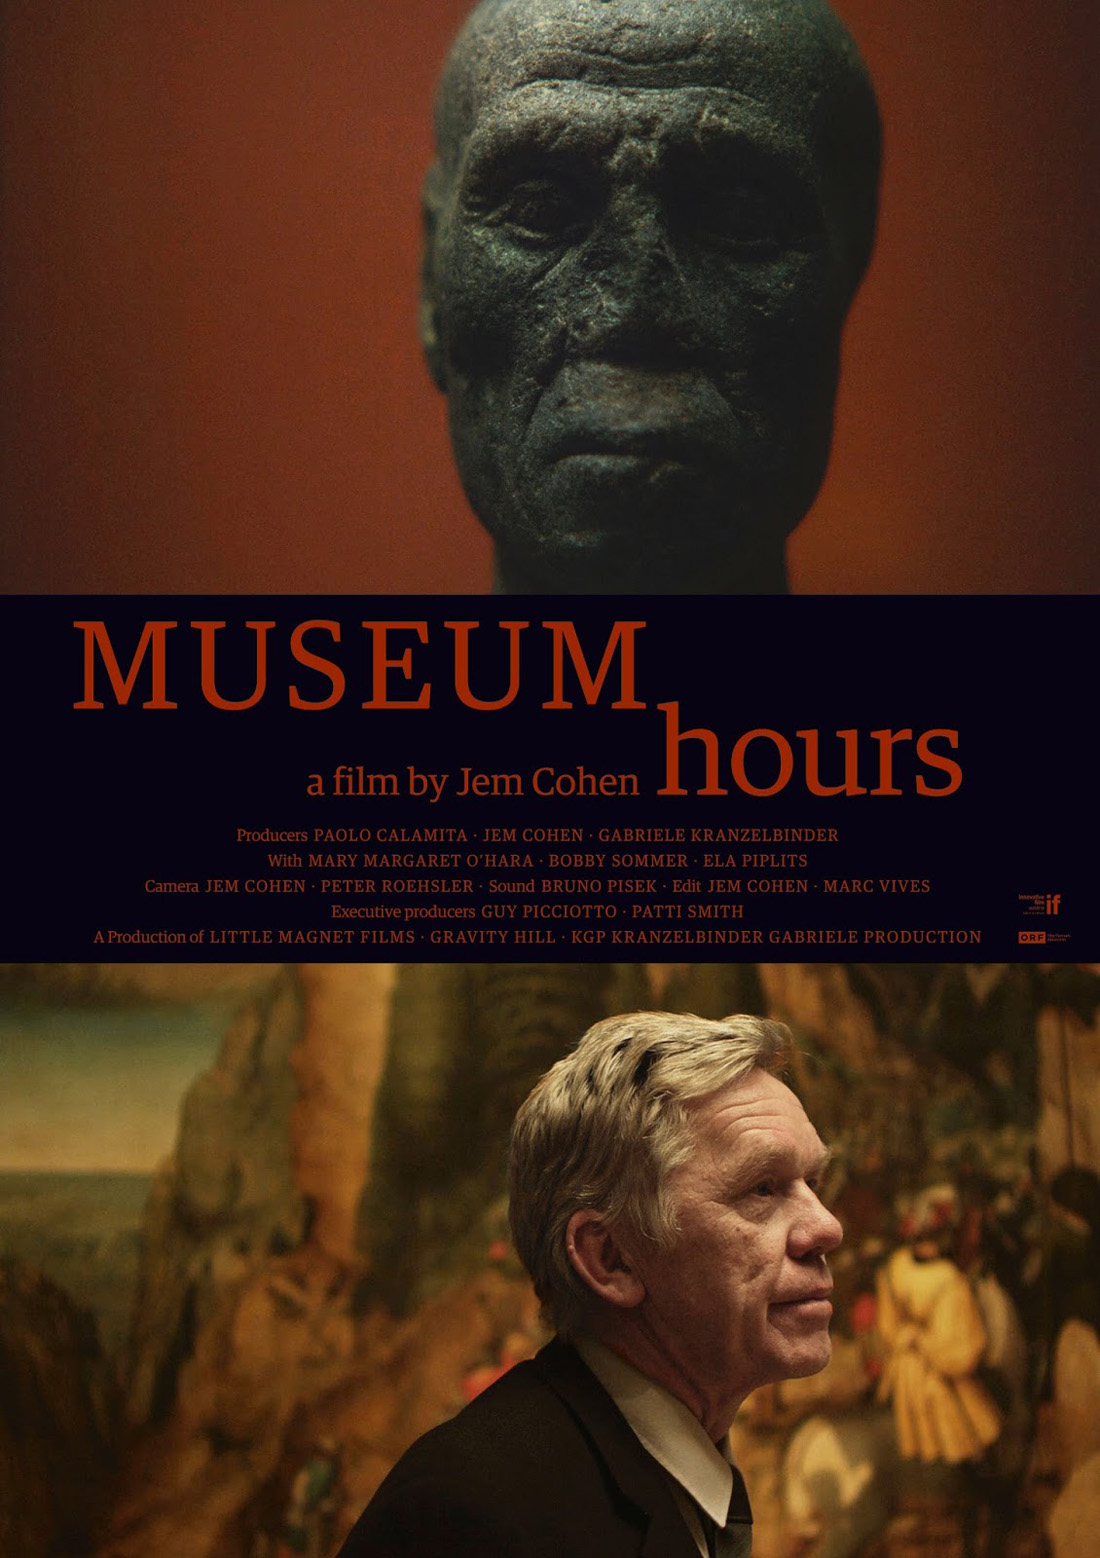 MG. Museum Hours